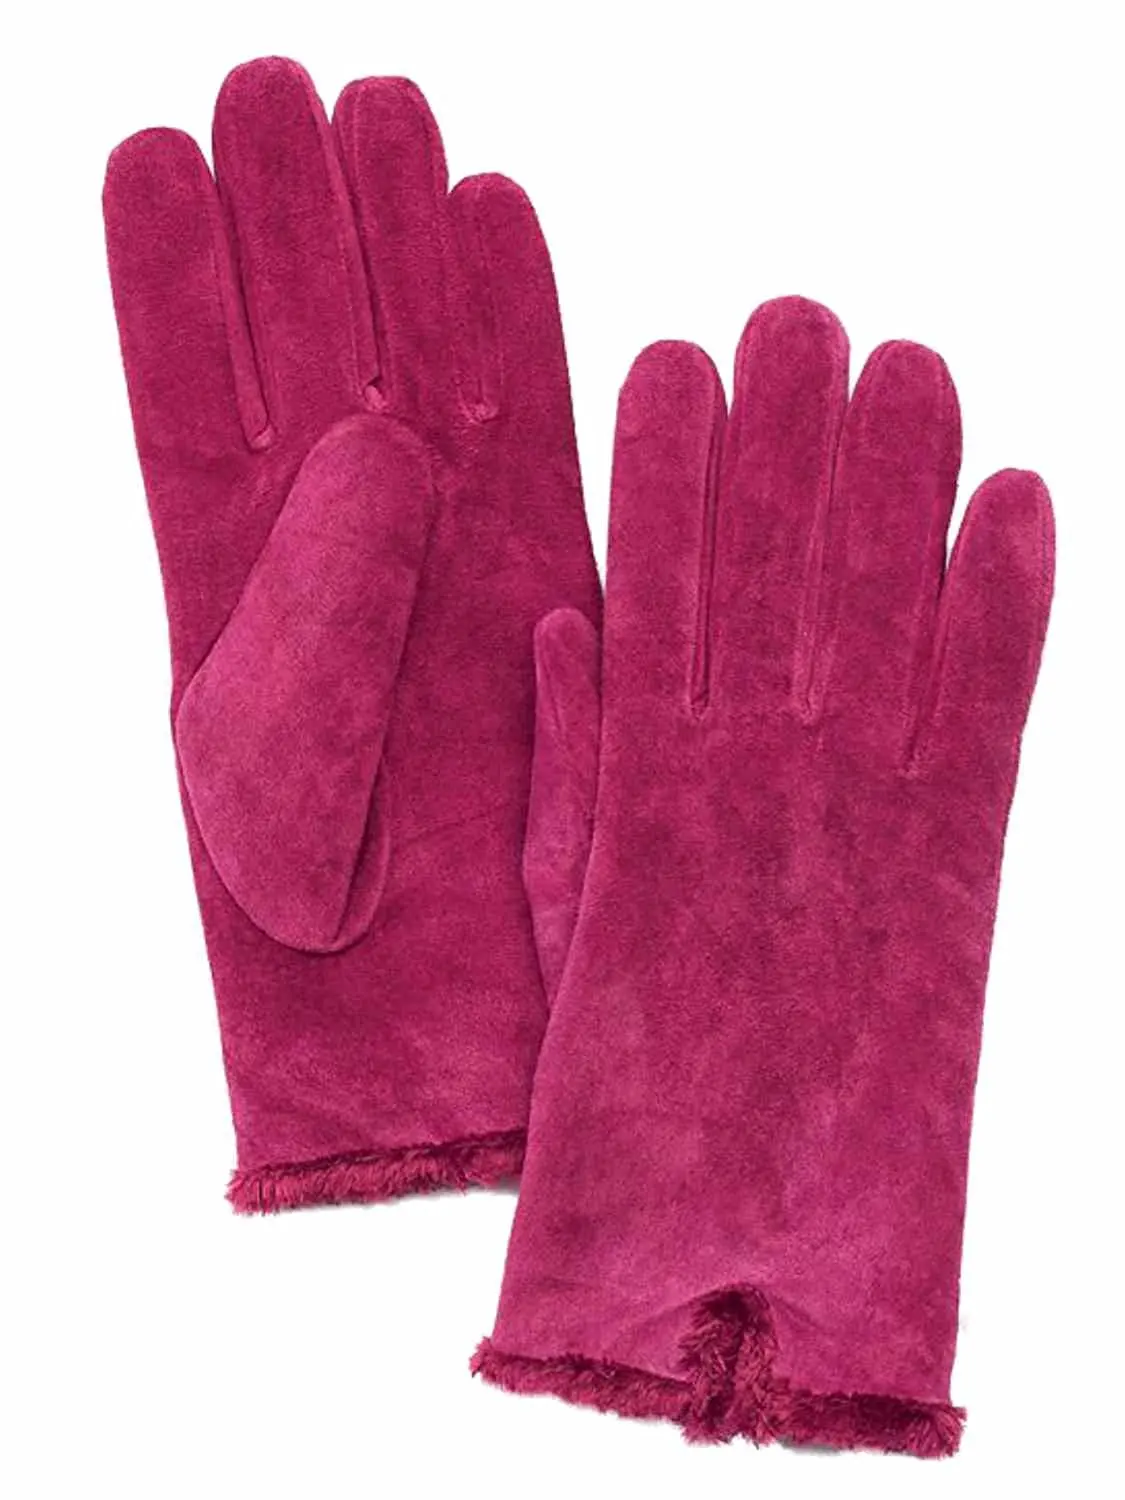 Cheap Isotoner Spandex Gloves, find Isotoner Spandex Gloves deals on ...